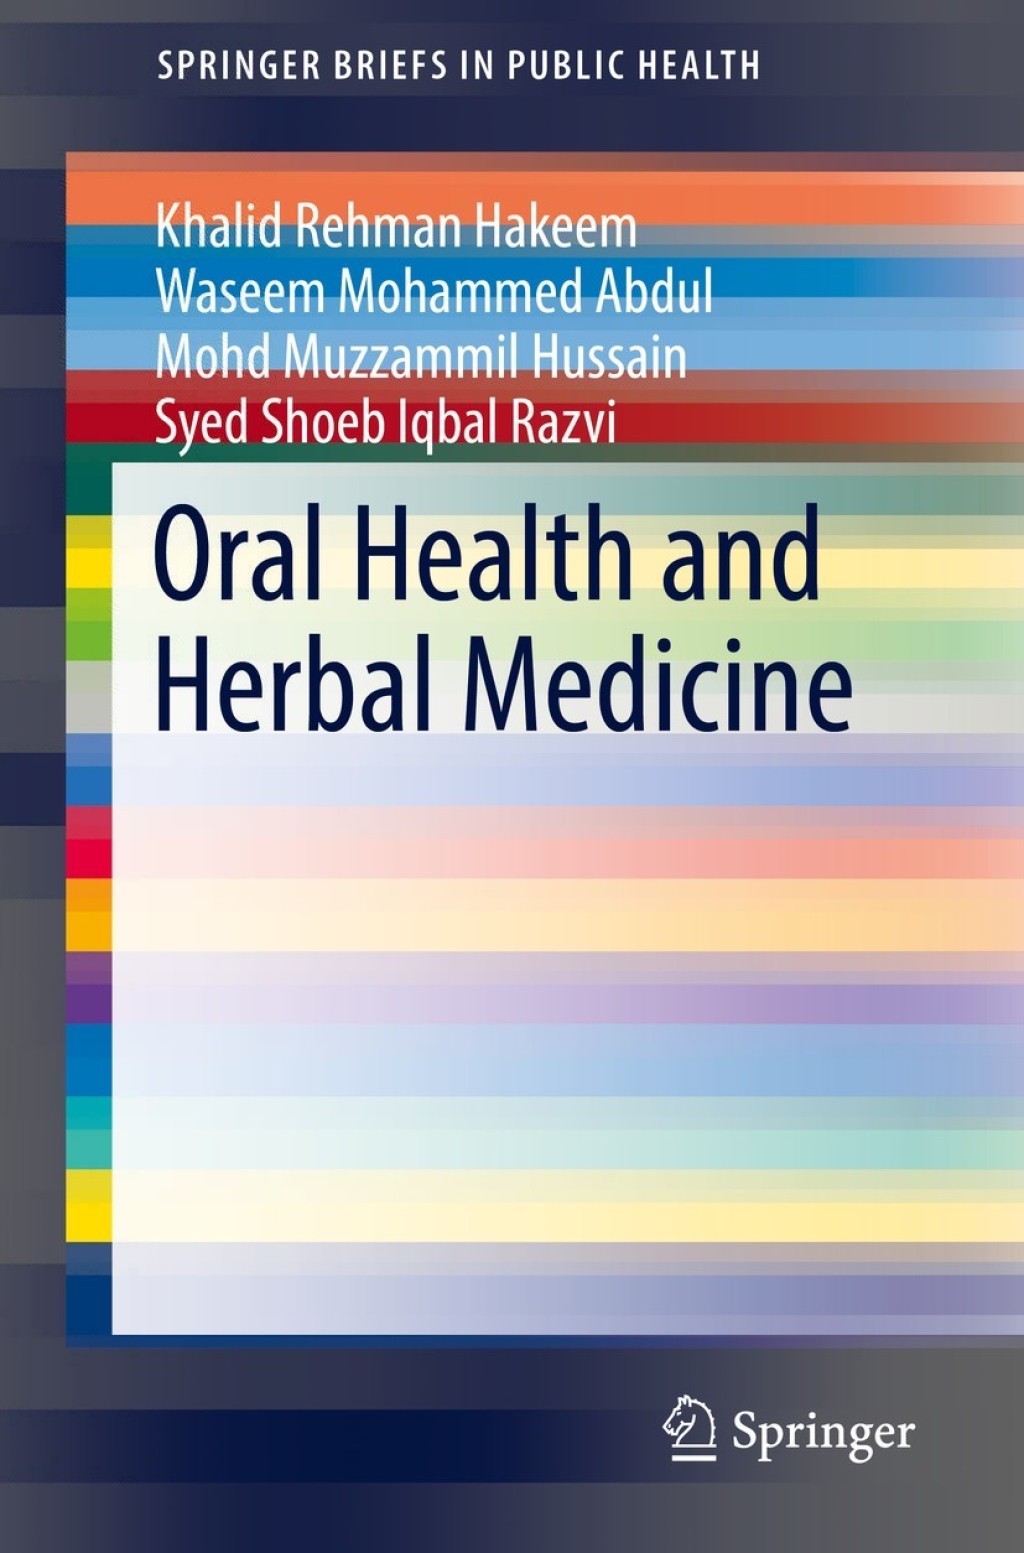 Oral Health and Herbal Medicine (eBook) - Khalid Rehman Hakeem; Waseem Mohammed Abdul; Mohd Muzzammil Hussain; Syed Shoeb Iqbal Razvi,